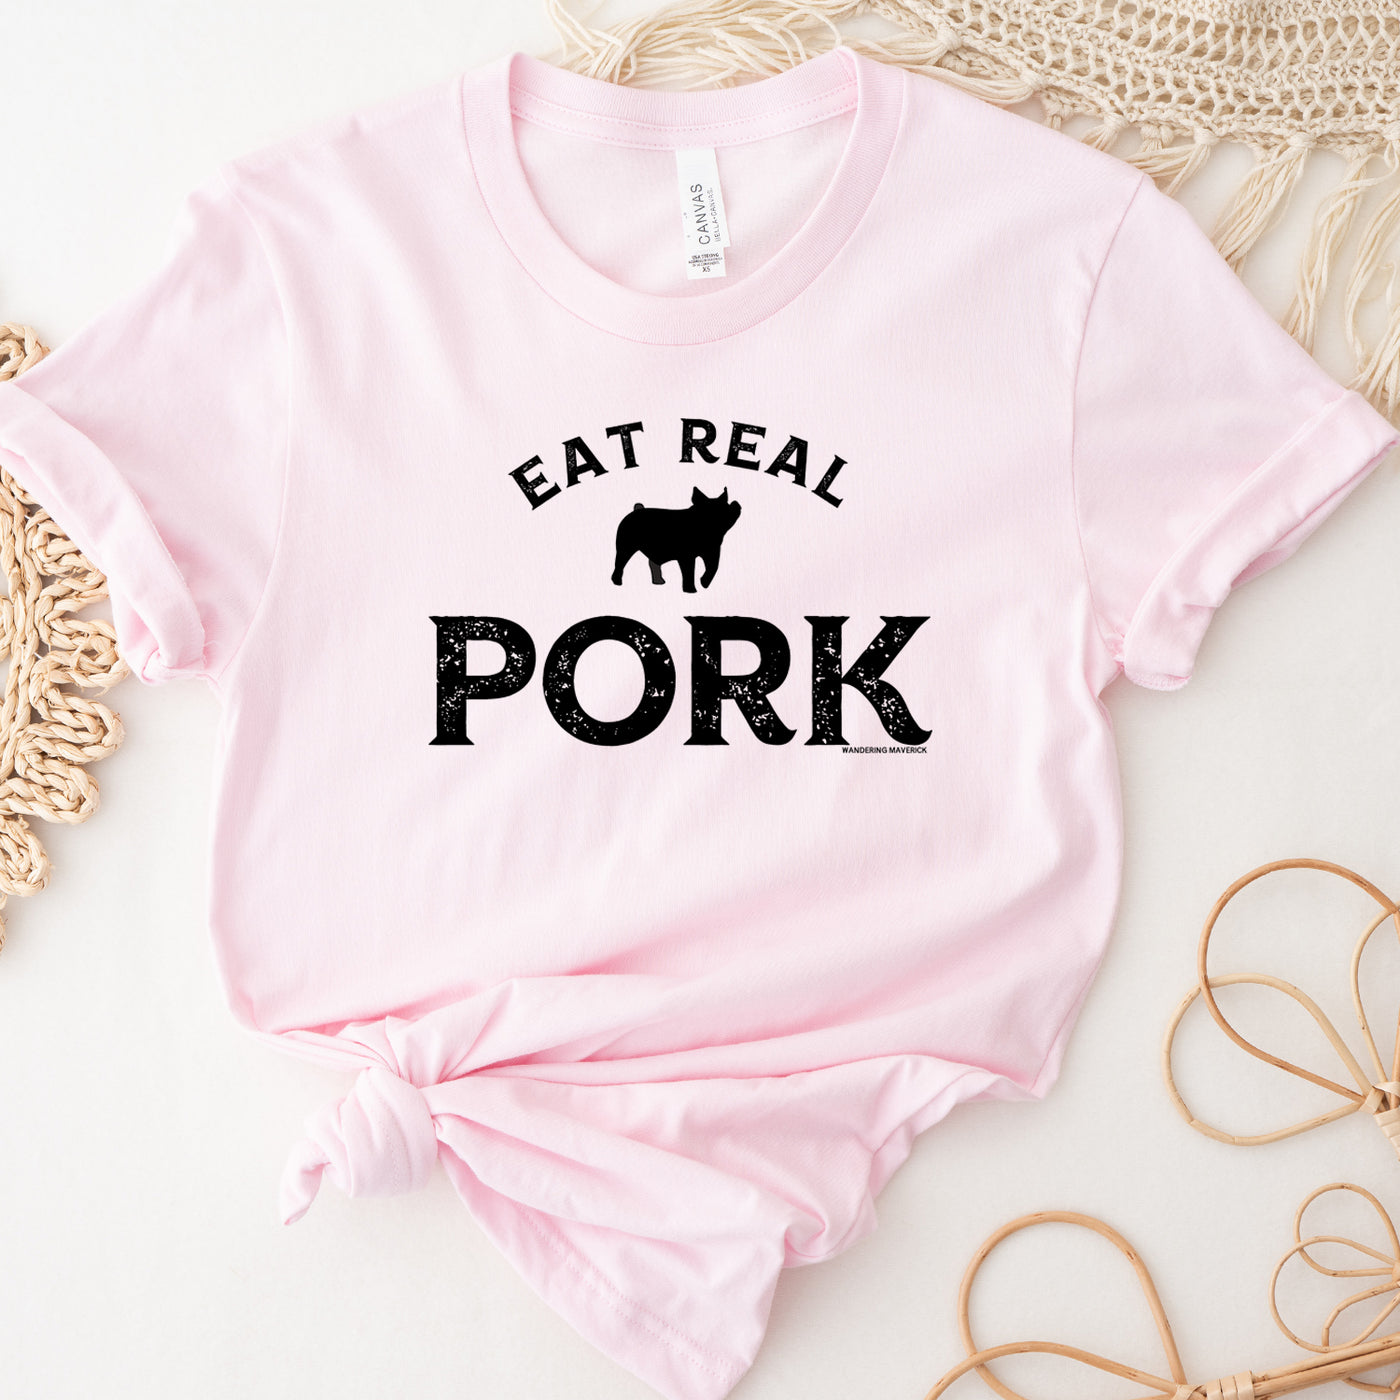 Eat Real Pork T-Shirt (XS-4XL) - Multiple Colors!